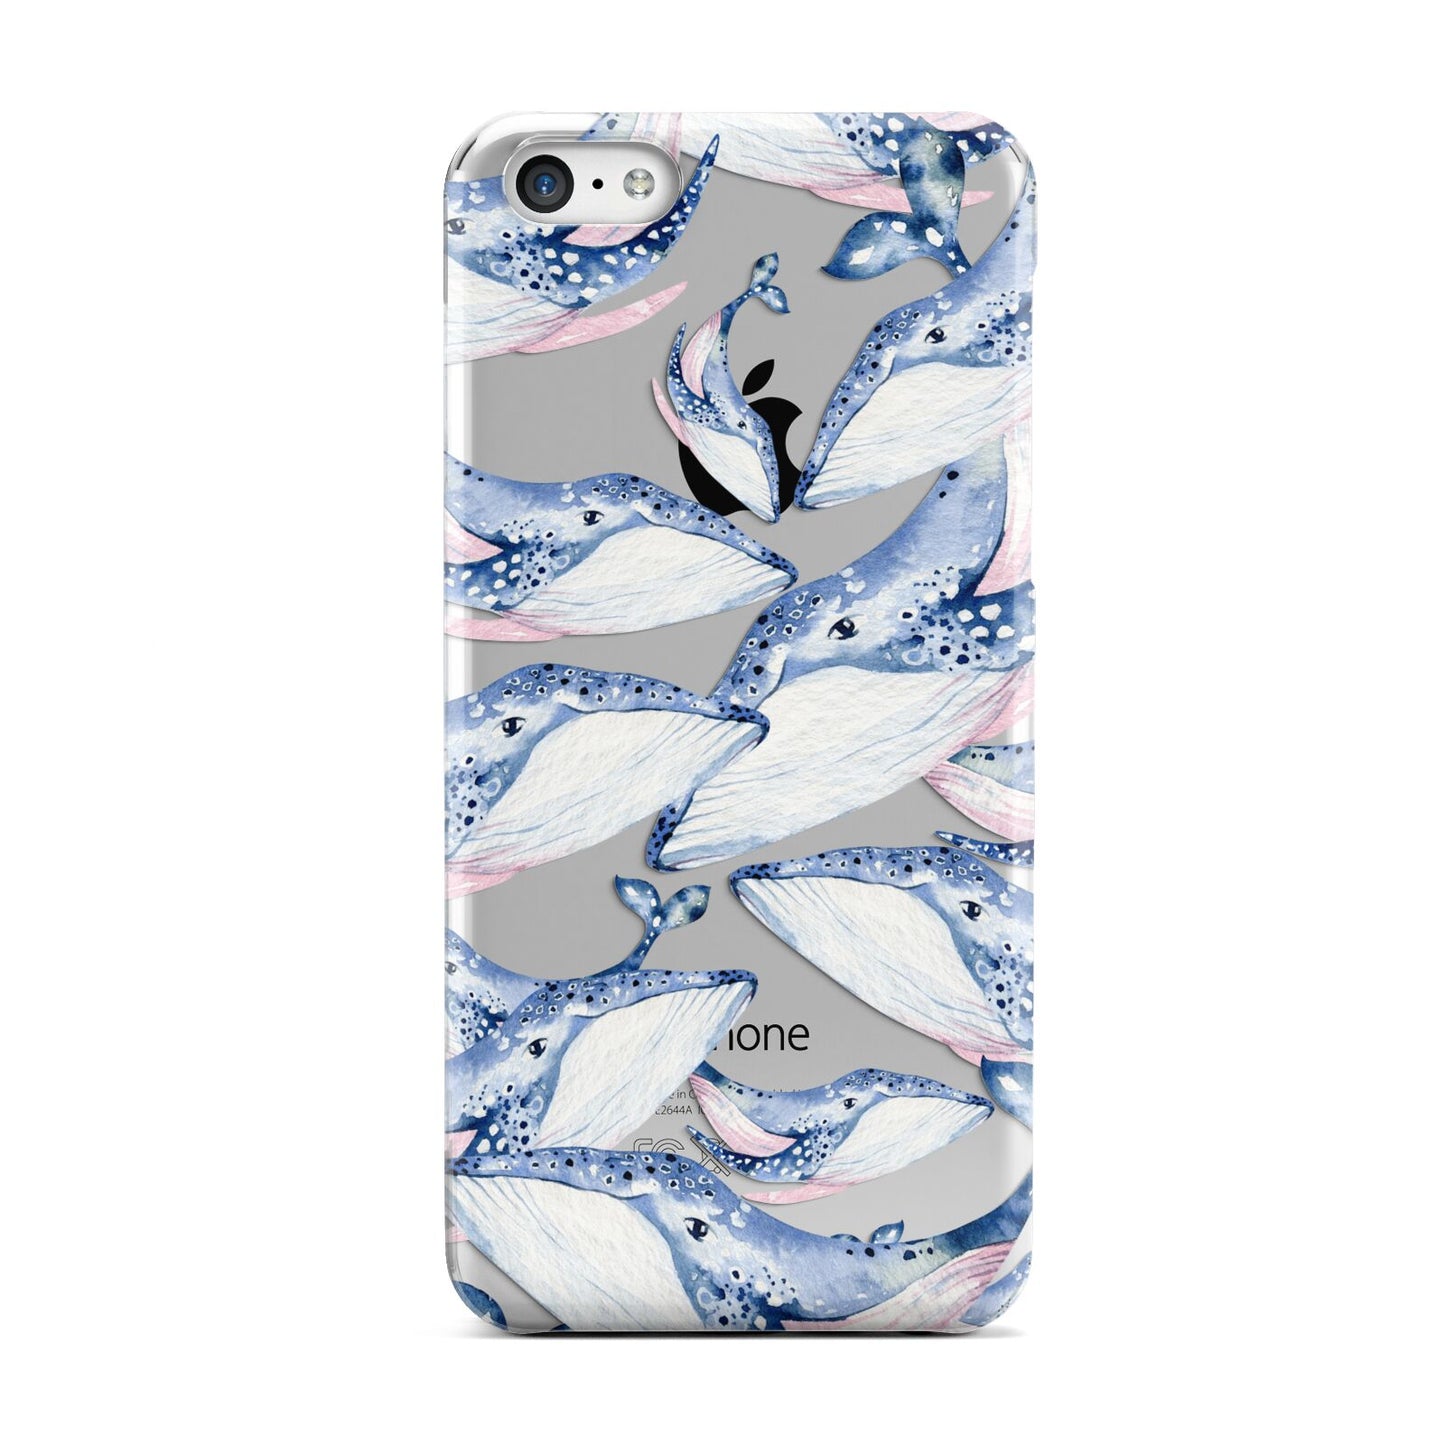 Whale Apple iPhone 5c Case